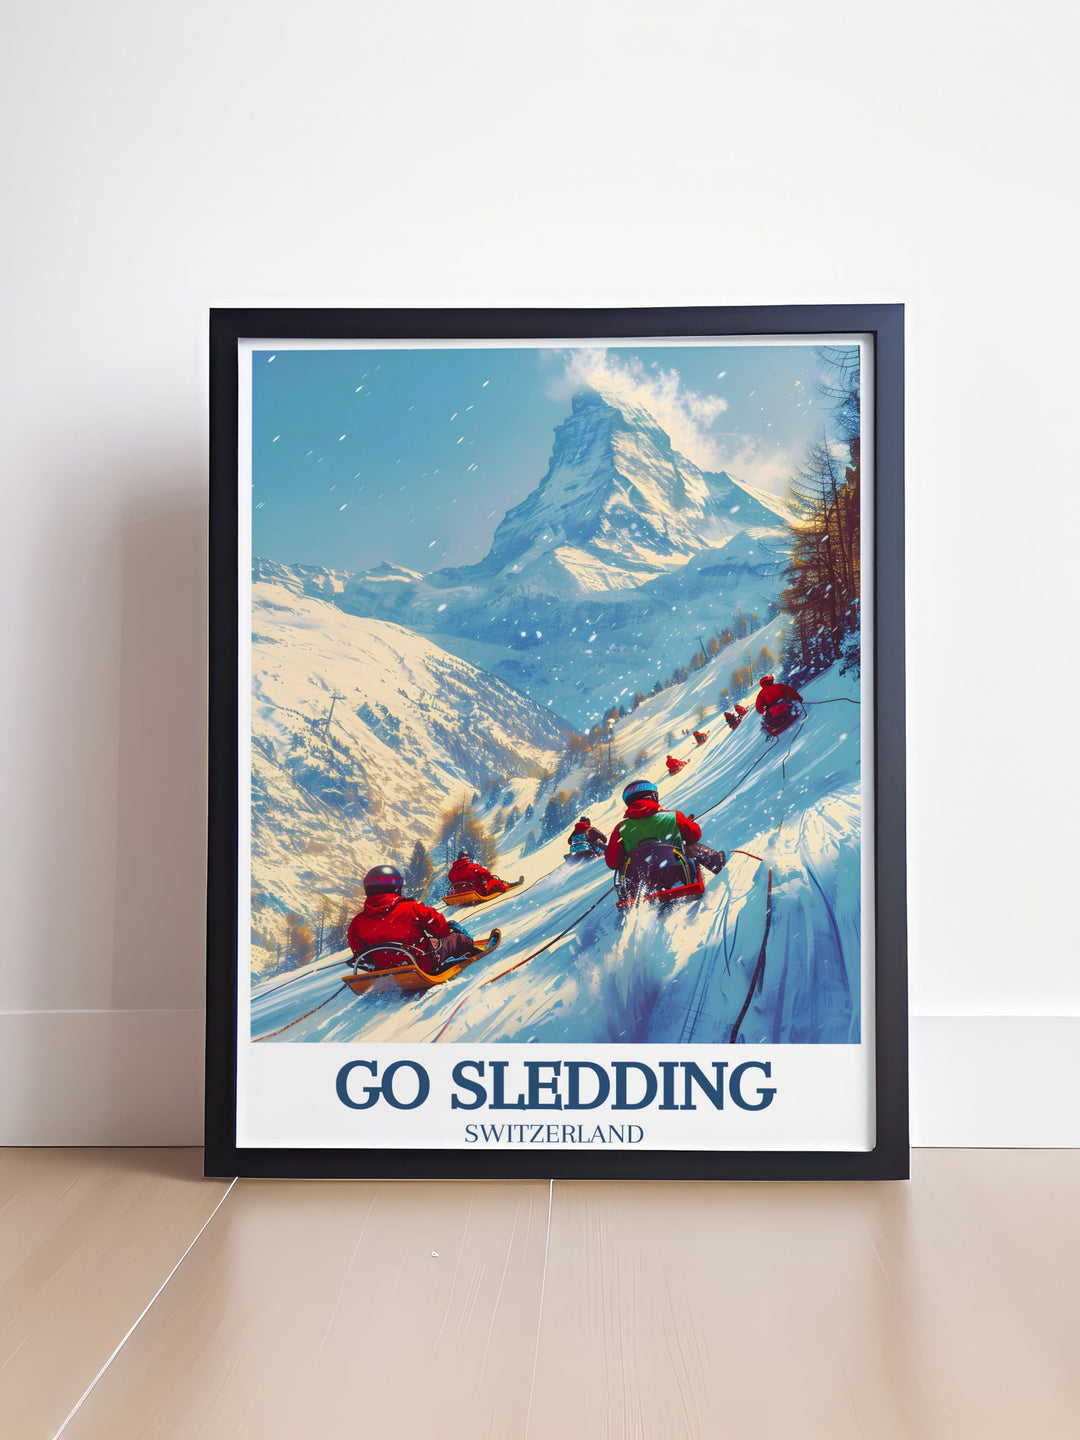 Fine art print showcasing a vibrant winter scene in Gornergrat, with sledders enjoying a thrilling ride amidst the stunning alpine backdrop.